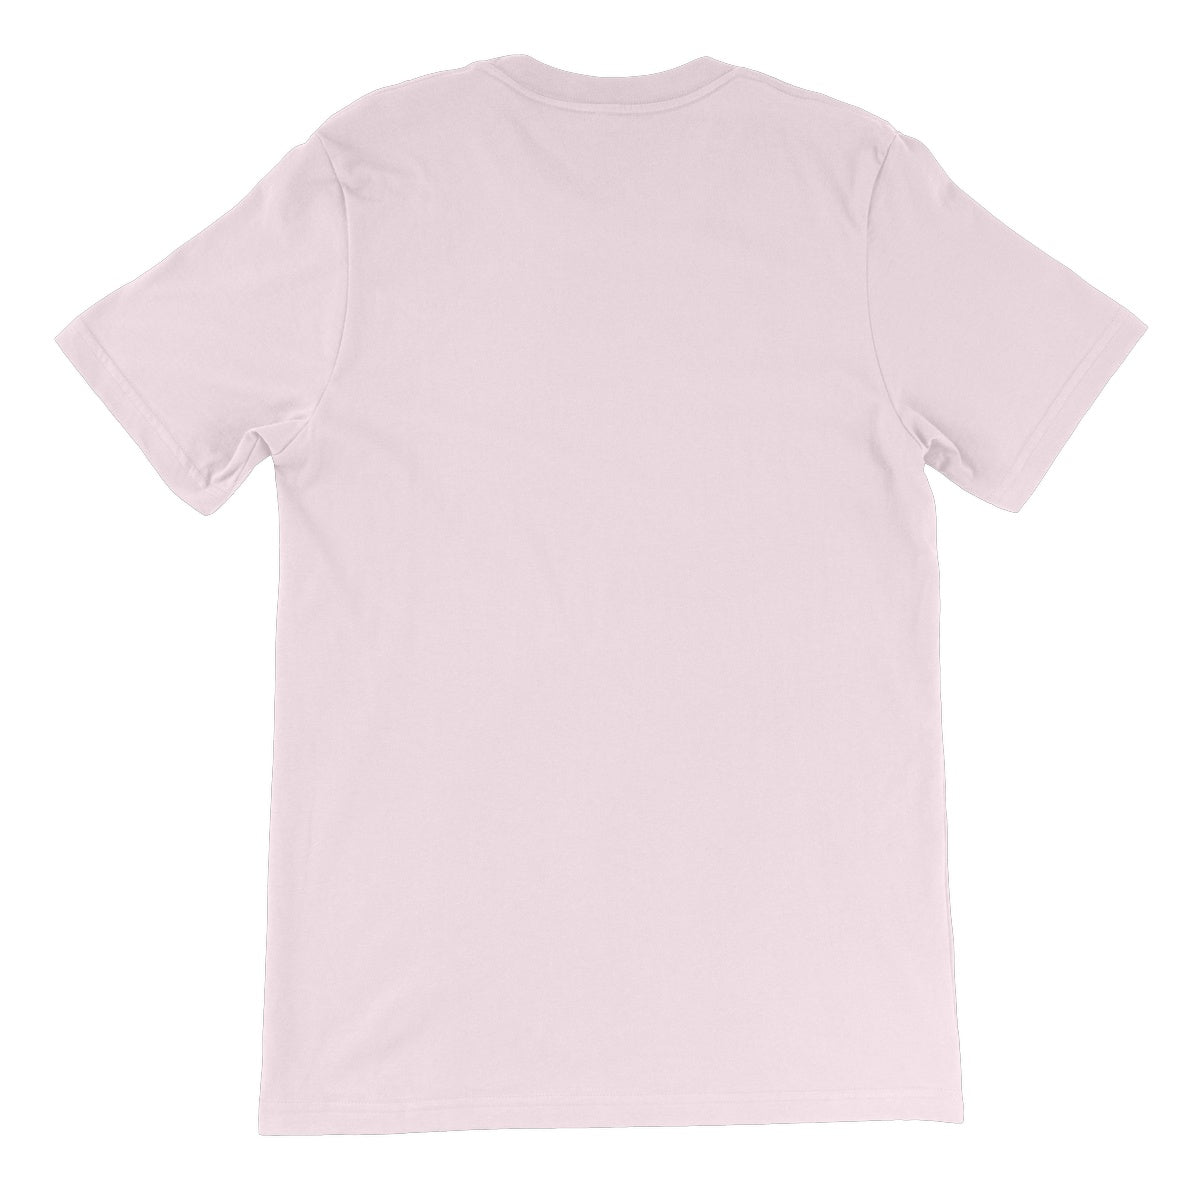 Binary Cascade, Black and White Unisex Short Sleeve T-Shirt